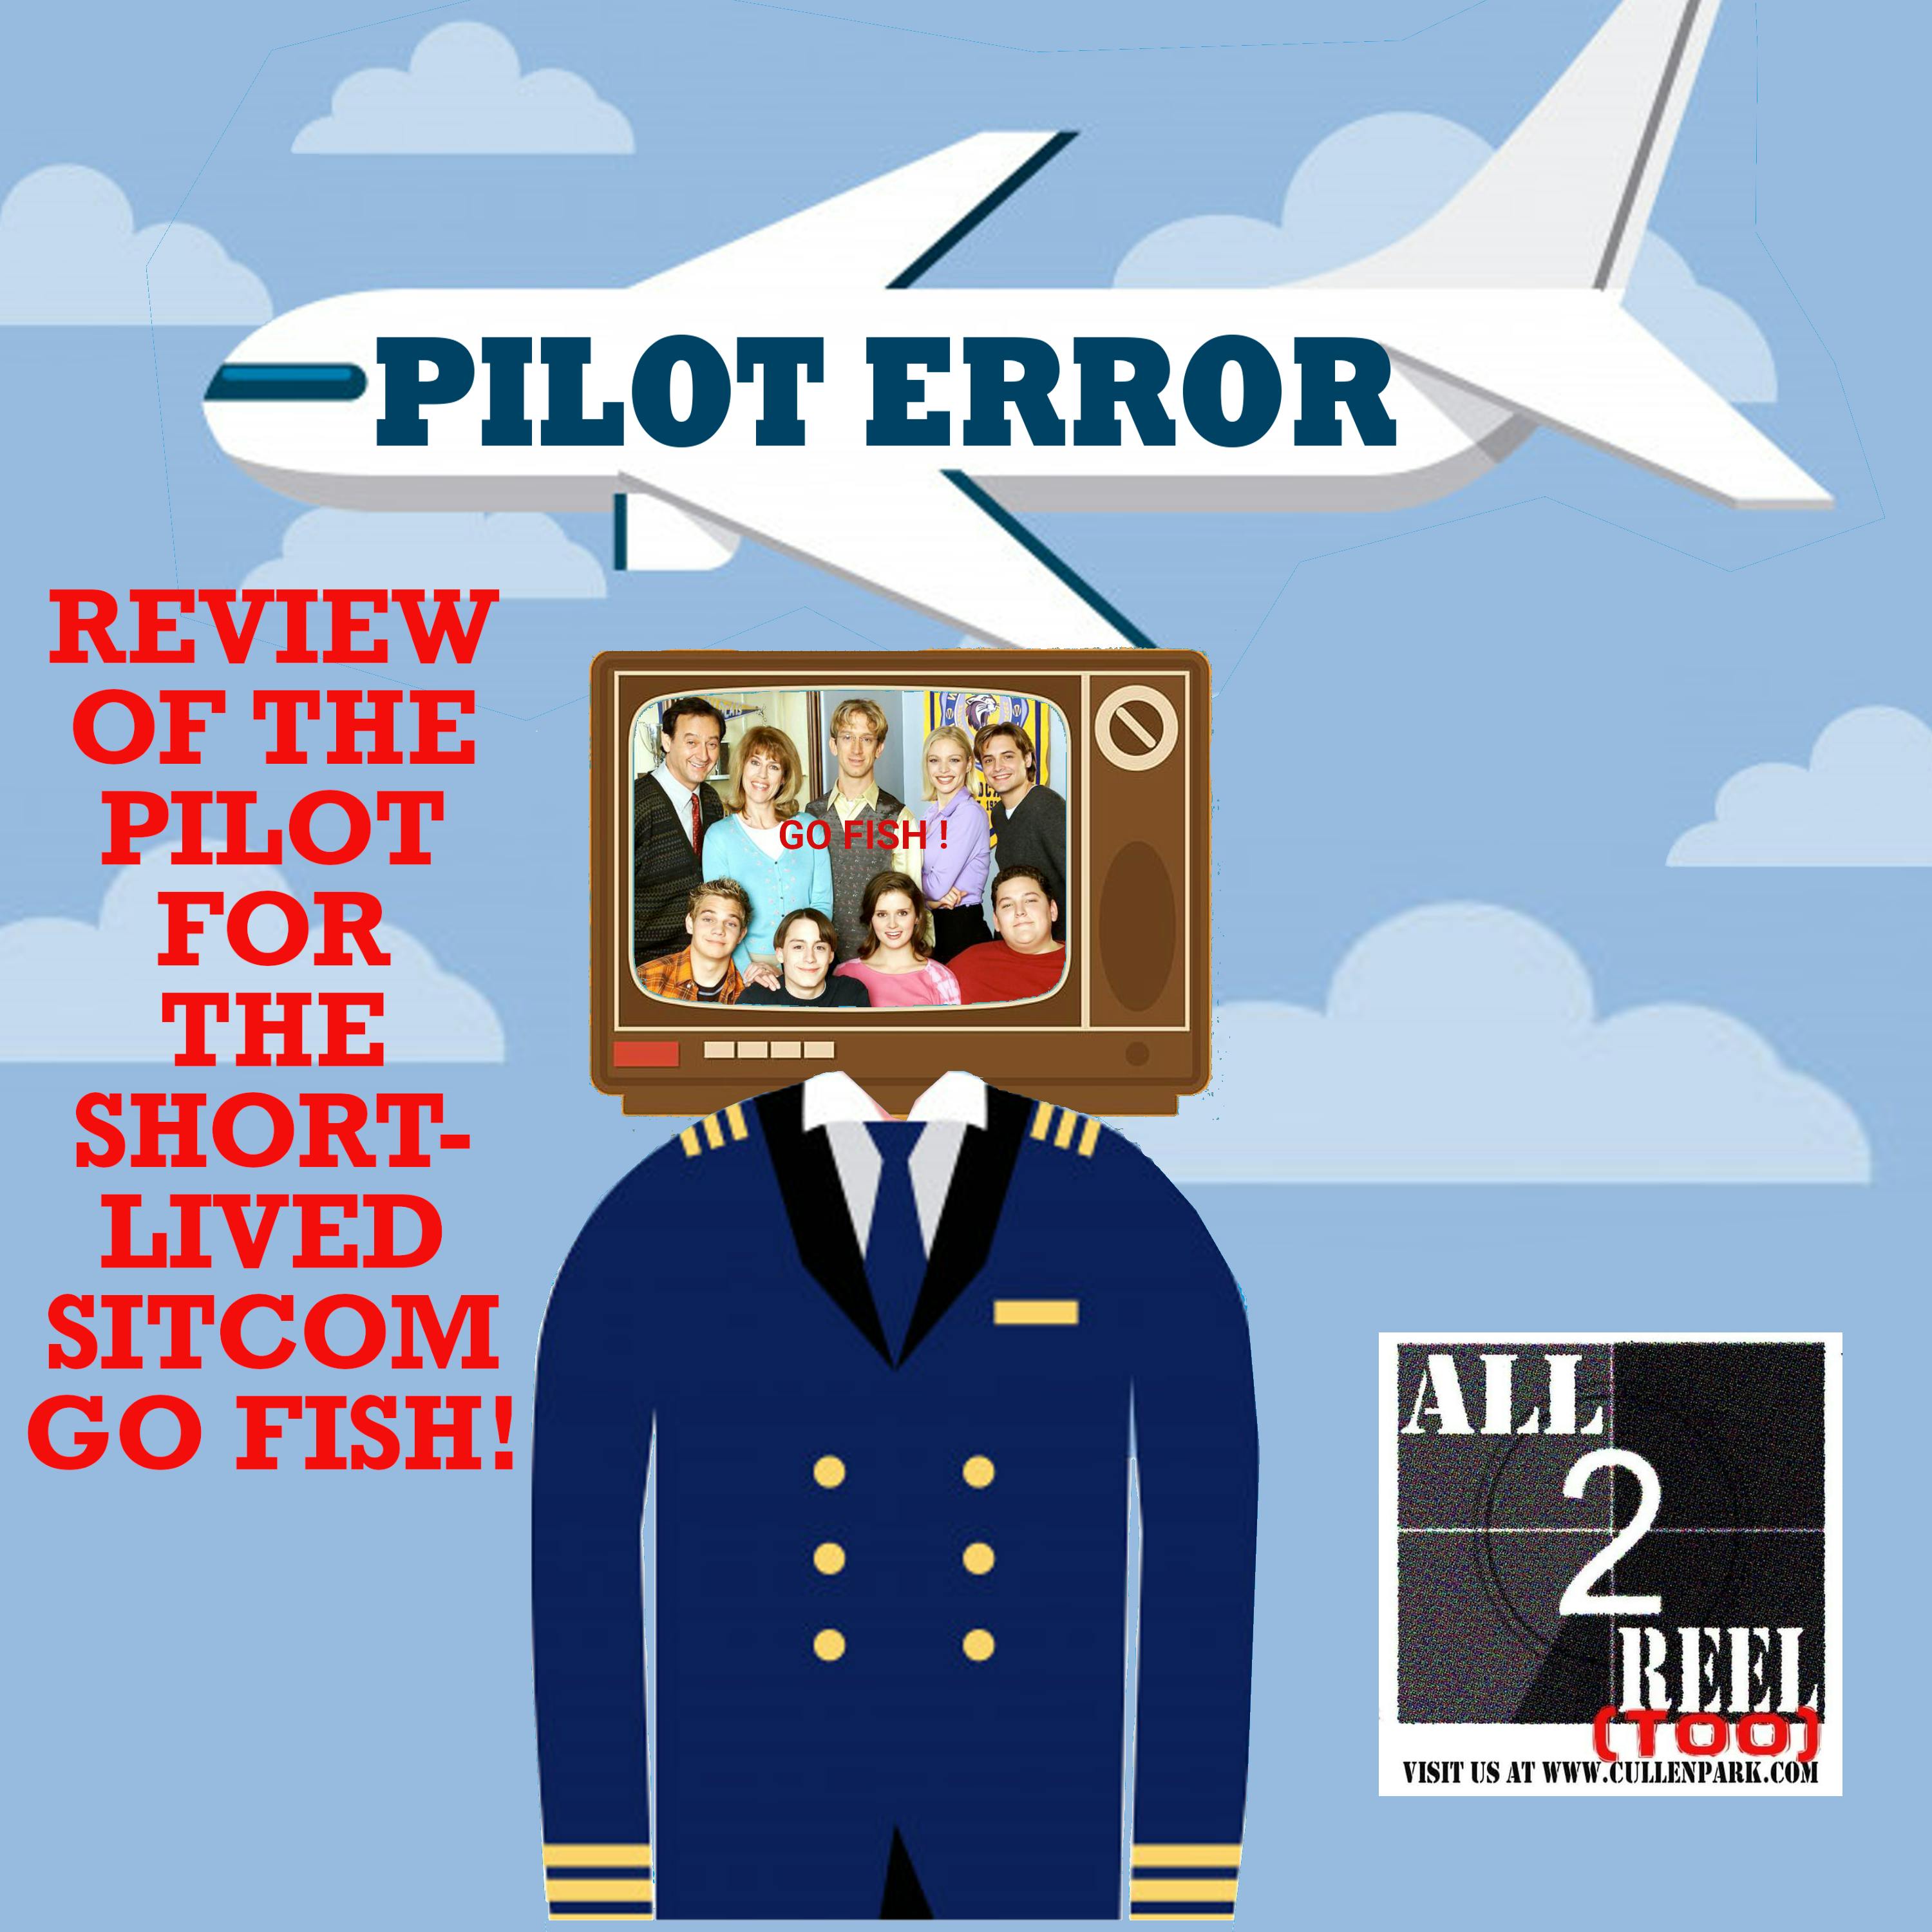 Go Fish (2001) - PILOT ERROR REVIEW Image